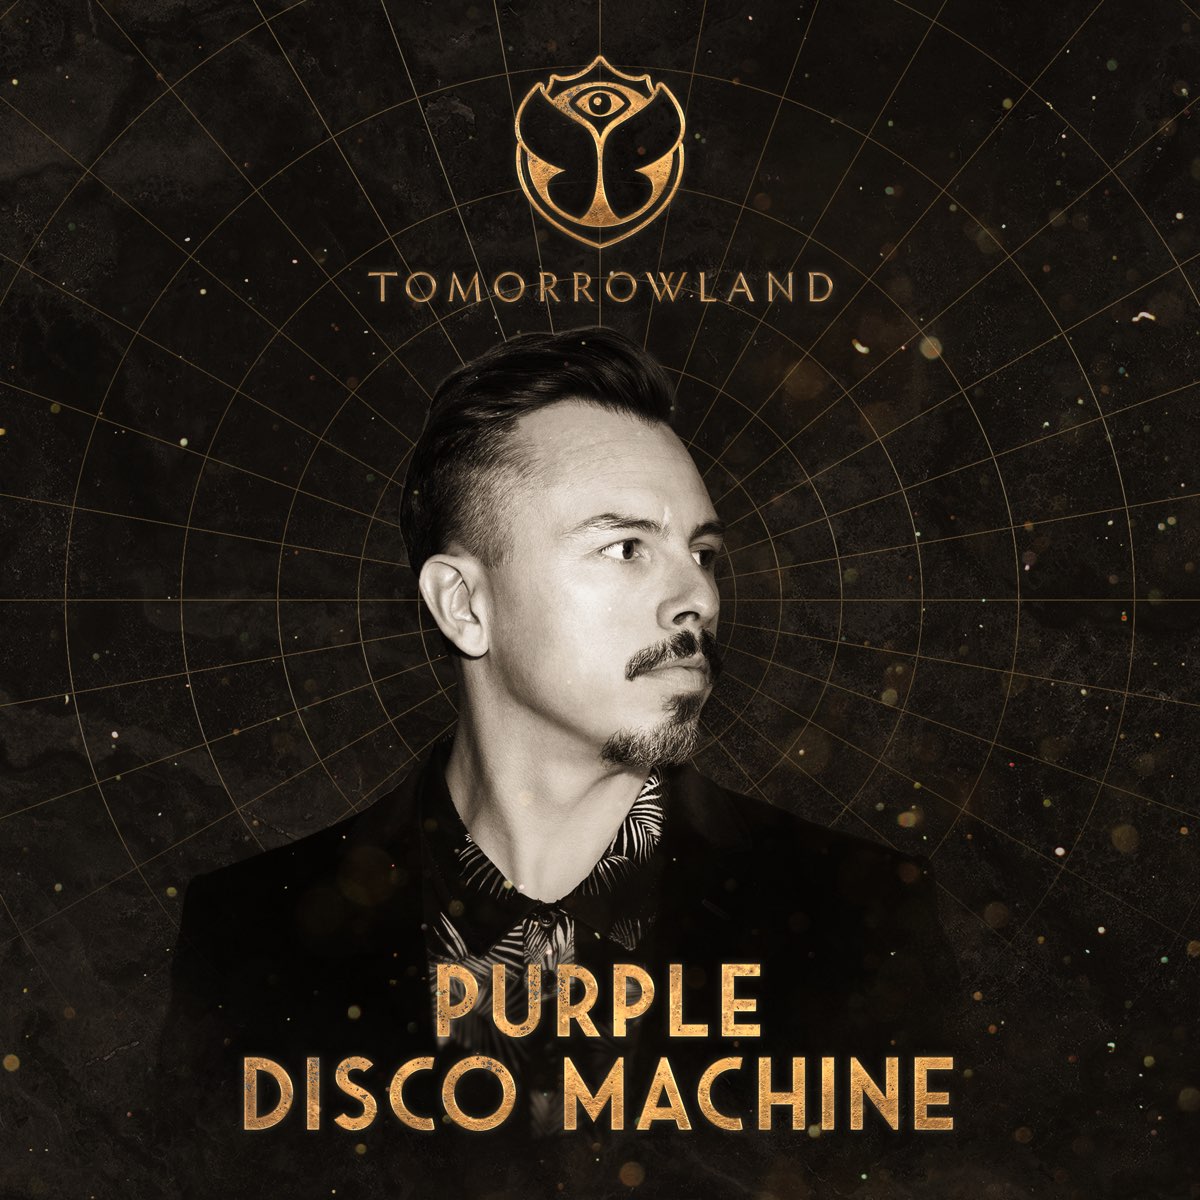 Tomorrowland 2022: Purple Disco Machine at Mainstage, Weekend 2